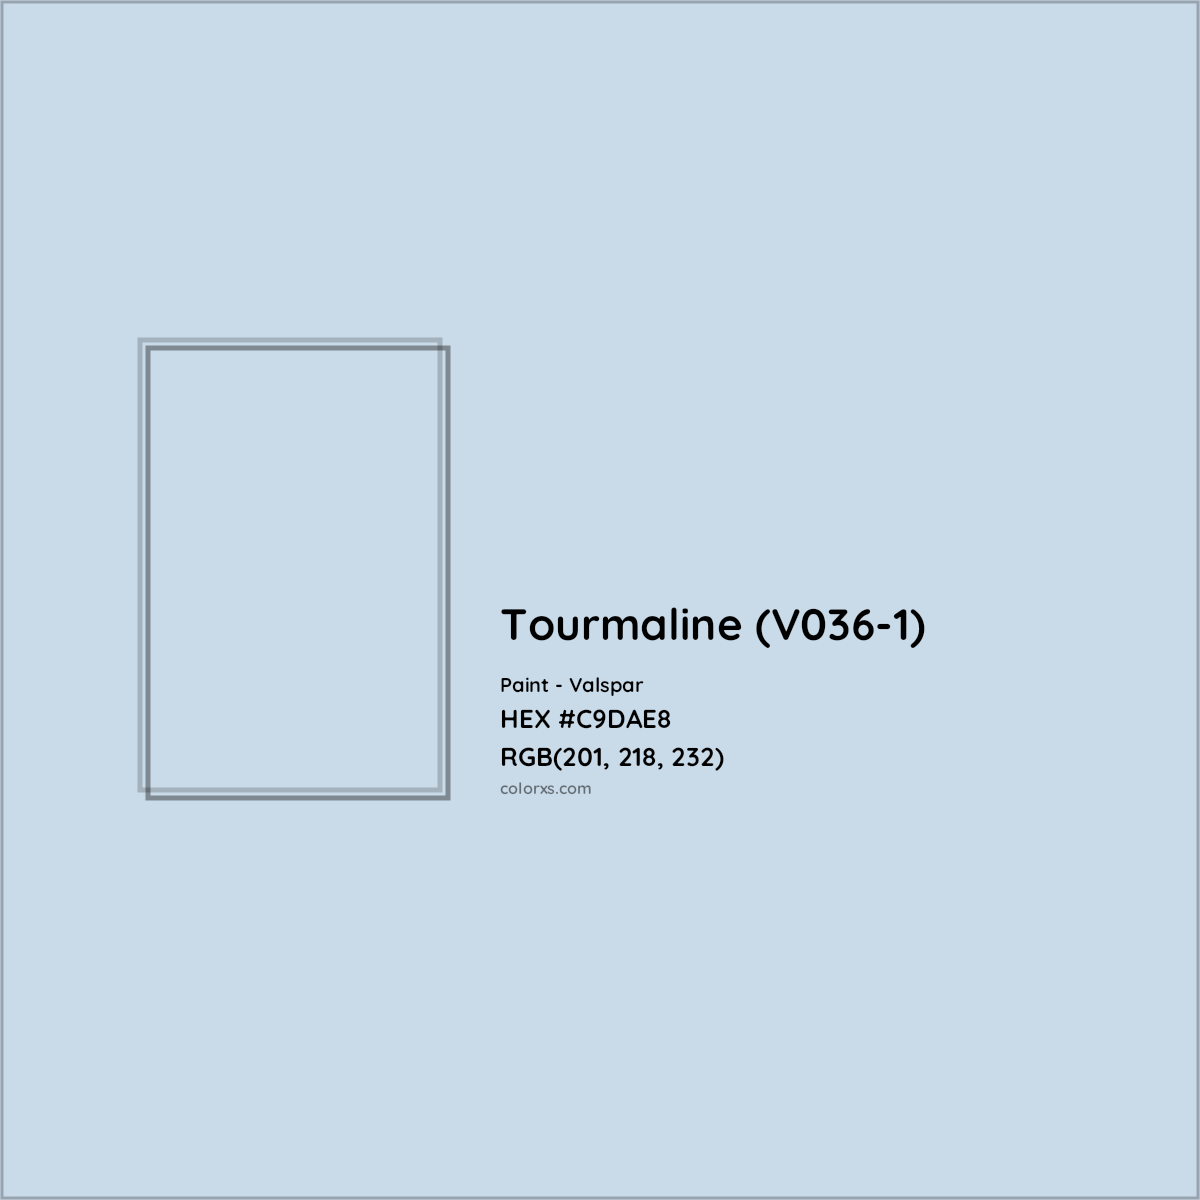 HEX #C9DAE8 Tourmaline (V036-1) Paint Valspar - Color Code